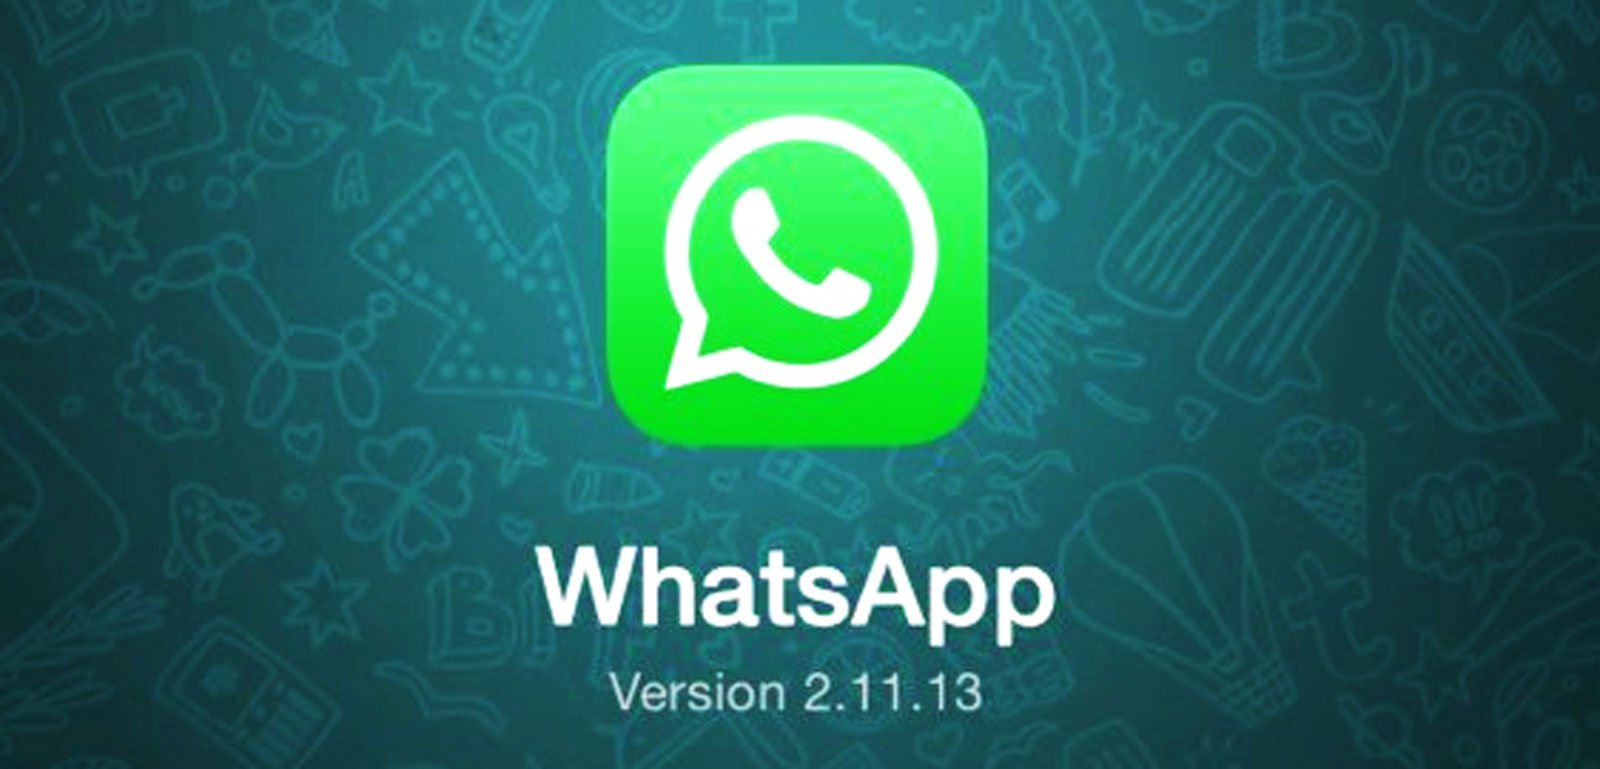 whatsapp update for iphone 6